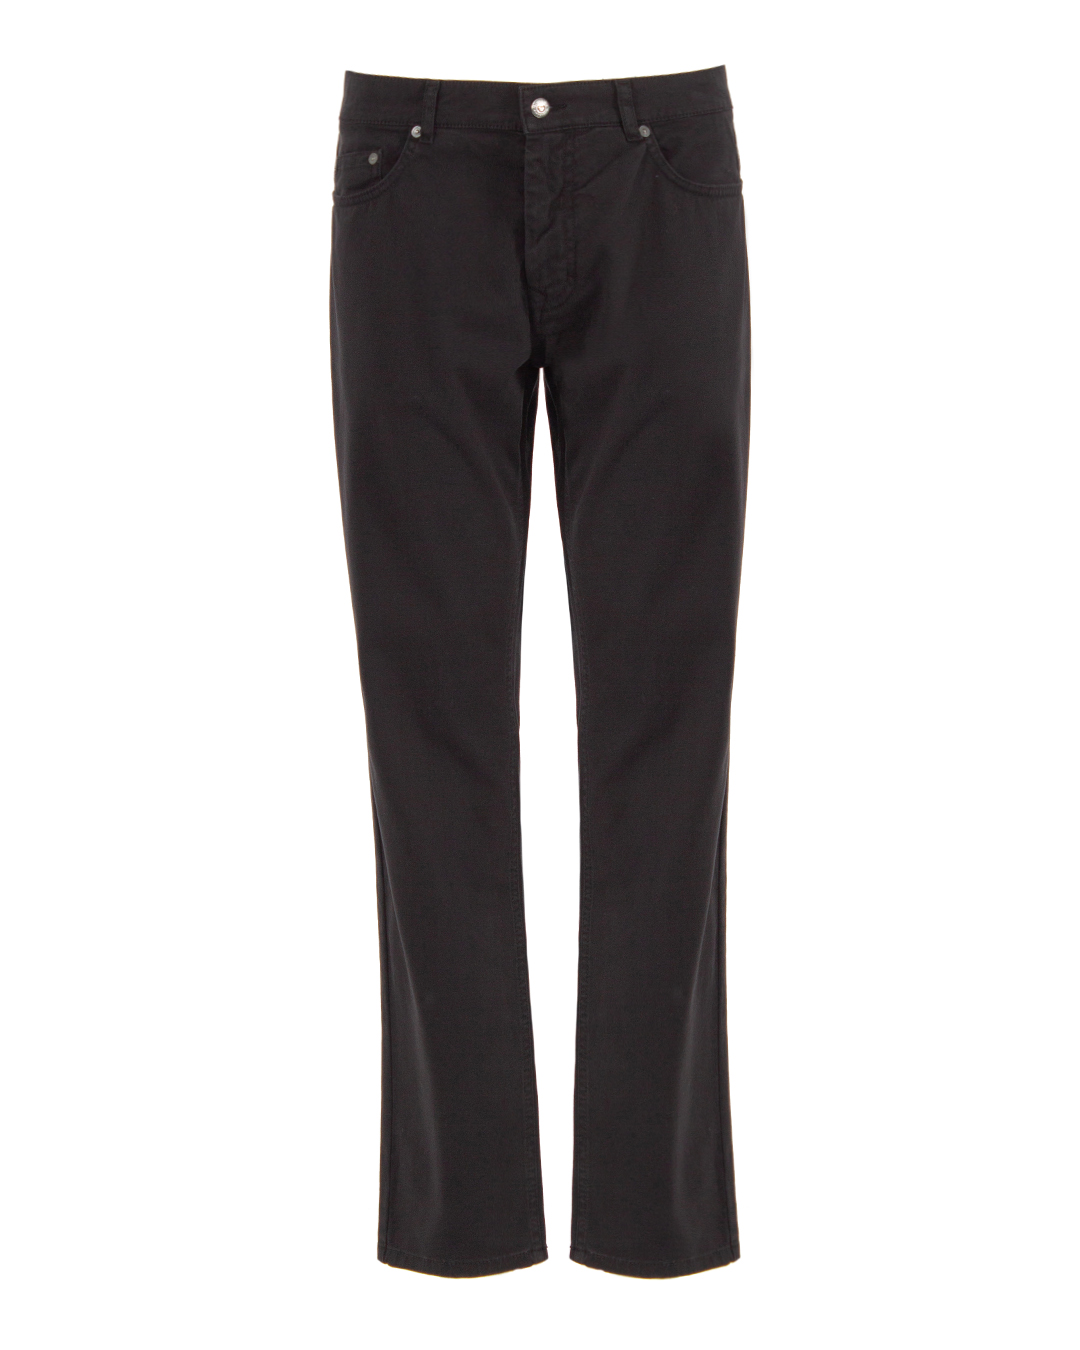 базовые джинсы Harmont & Blaine WNK001 черный 56, размер 56